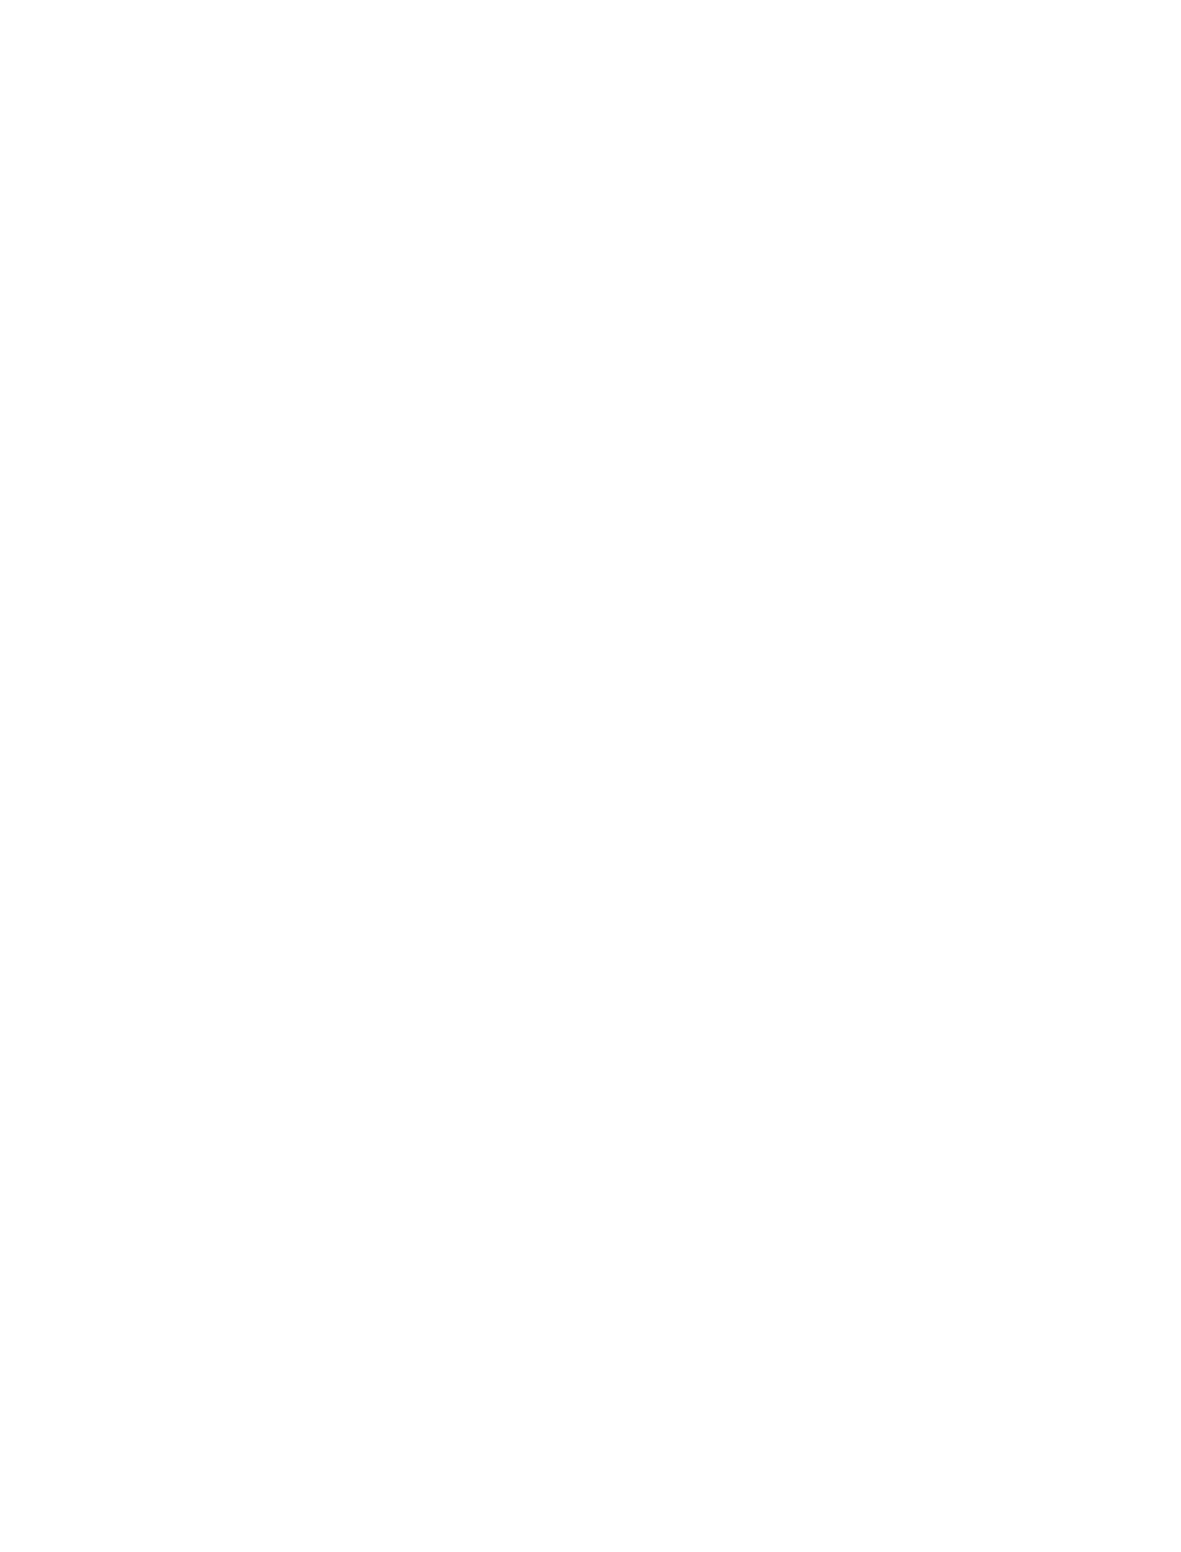 Sagax logo for dark backgrounds (transparent PNG)